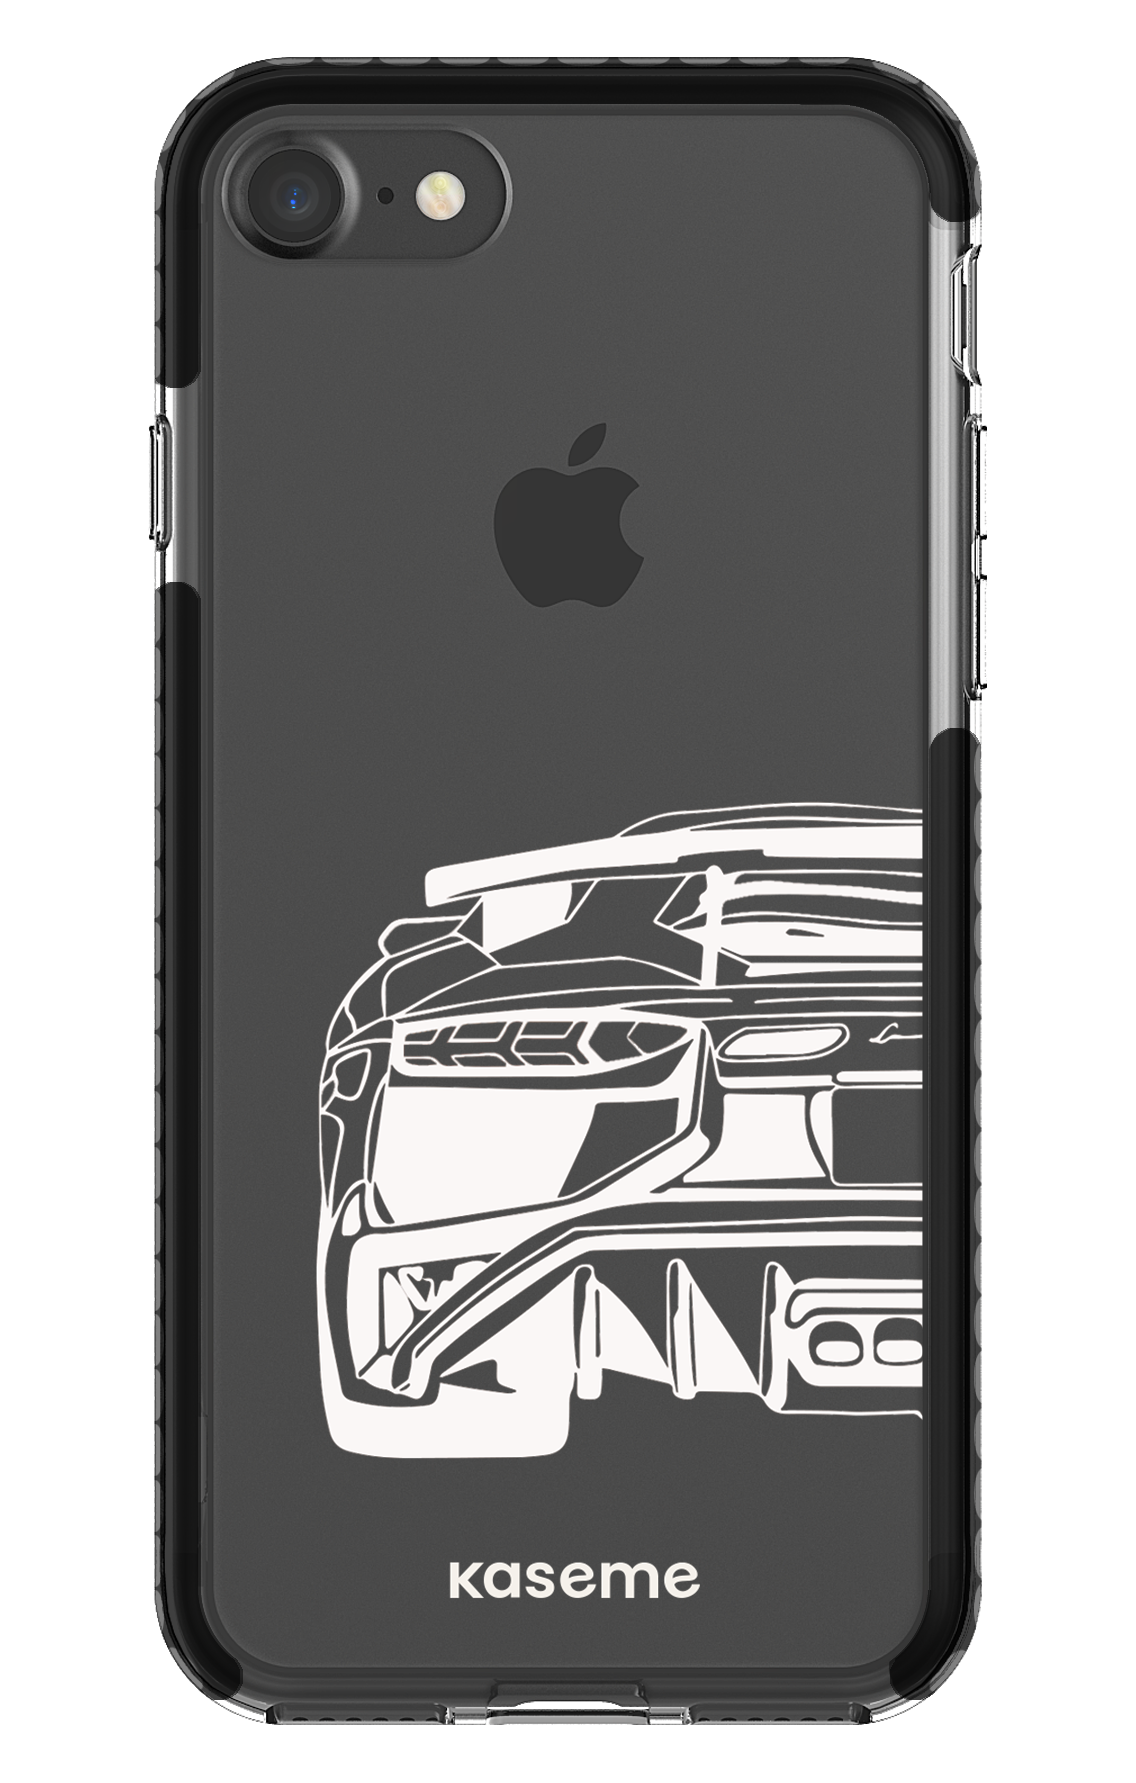 Lambo clear case - iPhone 7